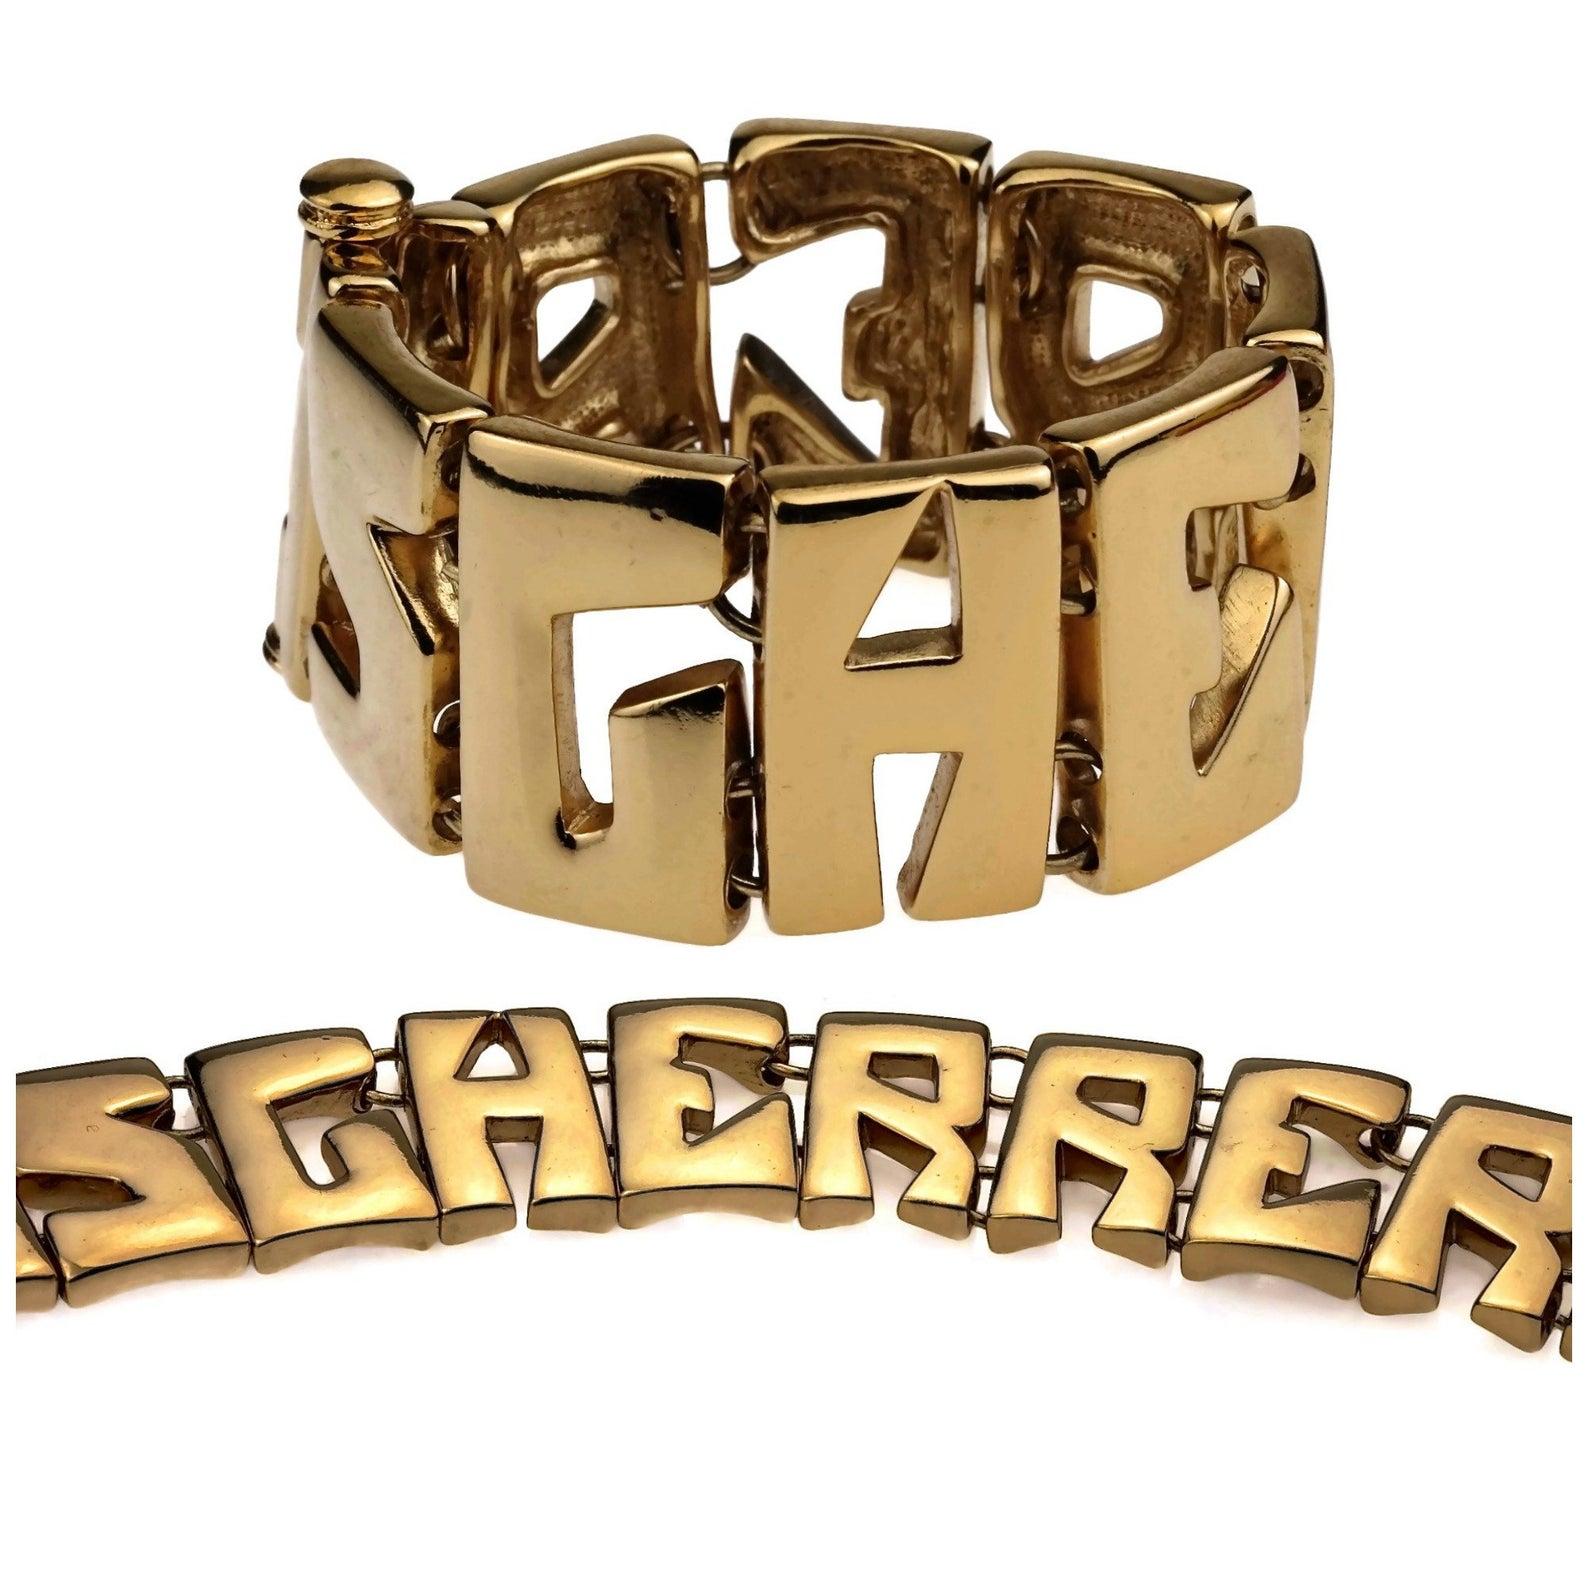 Vintage JEAN LOUIS SCHERRER Letters Spelled Out Bracelet

Measurements:
Height: 1.30 inches (3.3 cm)
Wearable Length: 7.48 inches (19 cm)

Features:
- 100% Authentic JEAN LOUIS SCHERRER.
- Unique spelled out SCHERRER letters bracelet.
- Gold tone.
-